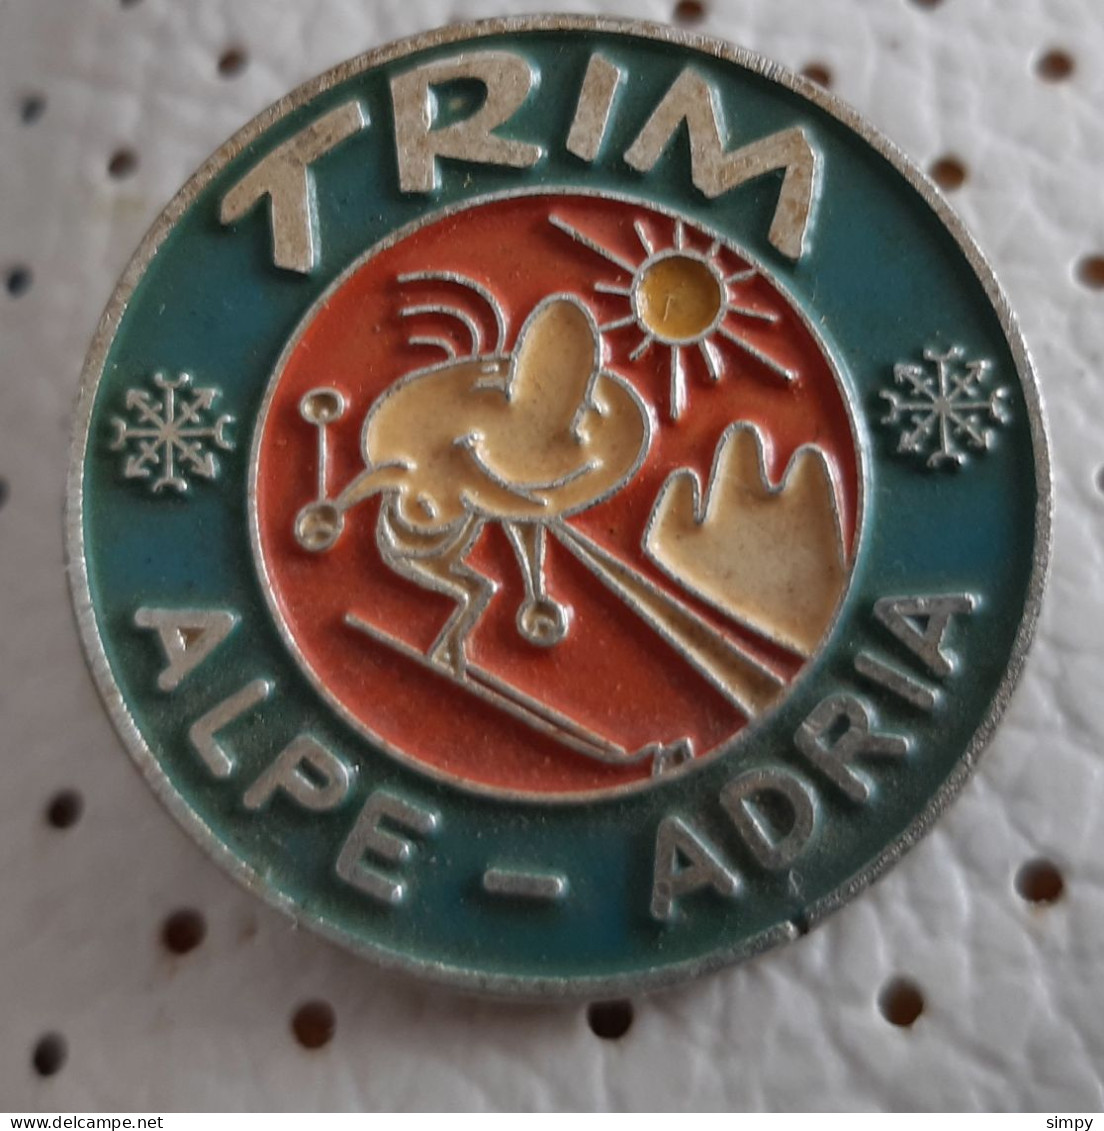 Trimcek TRIM Alpe Adria Skiing SLovenia Pin - Winter Sports